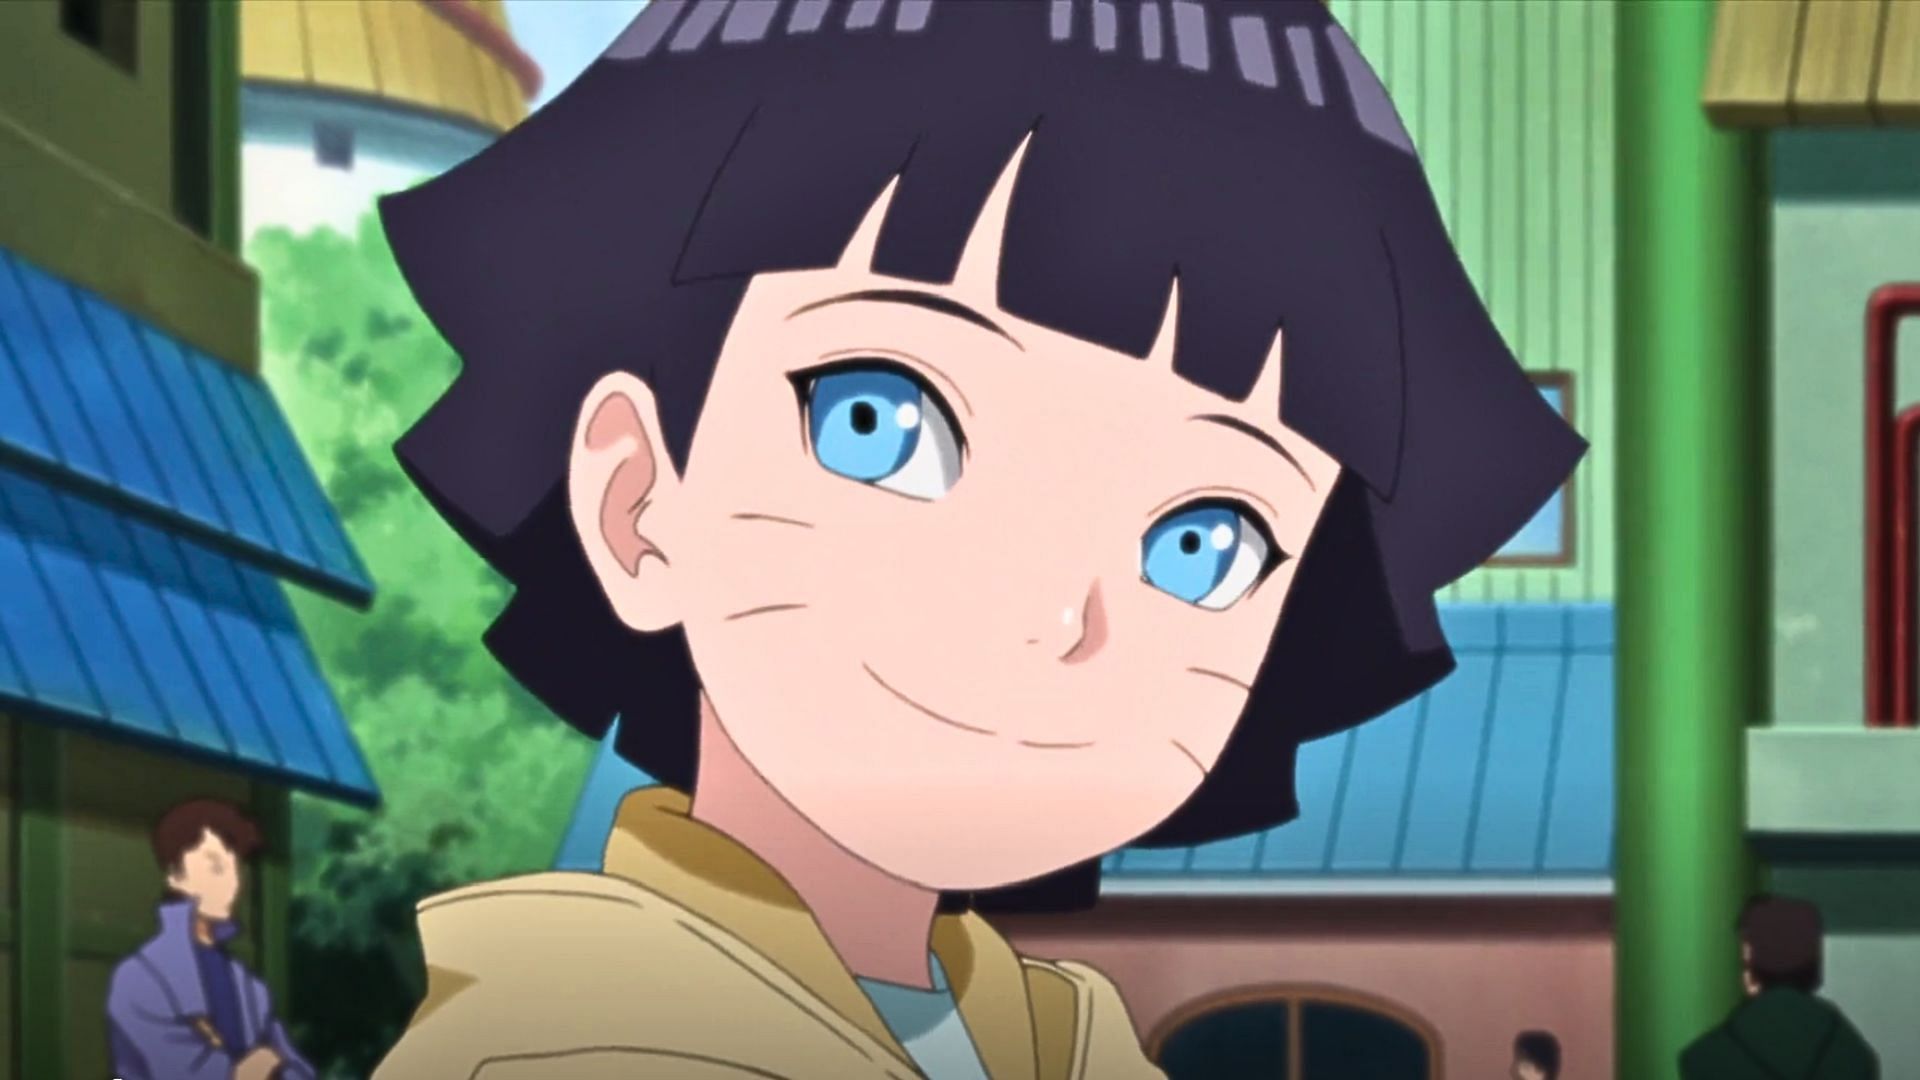 Himawari as seen in the Boruto anime (Image via Studio Pierrot)